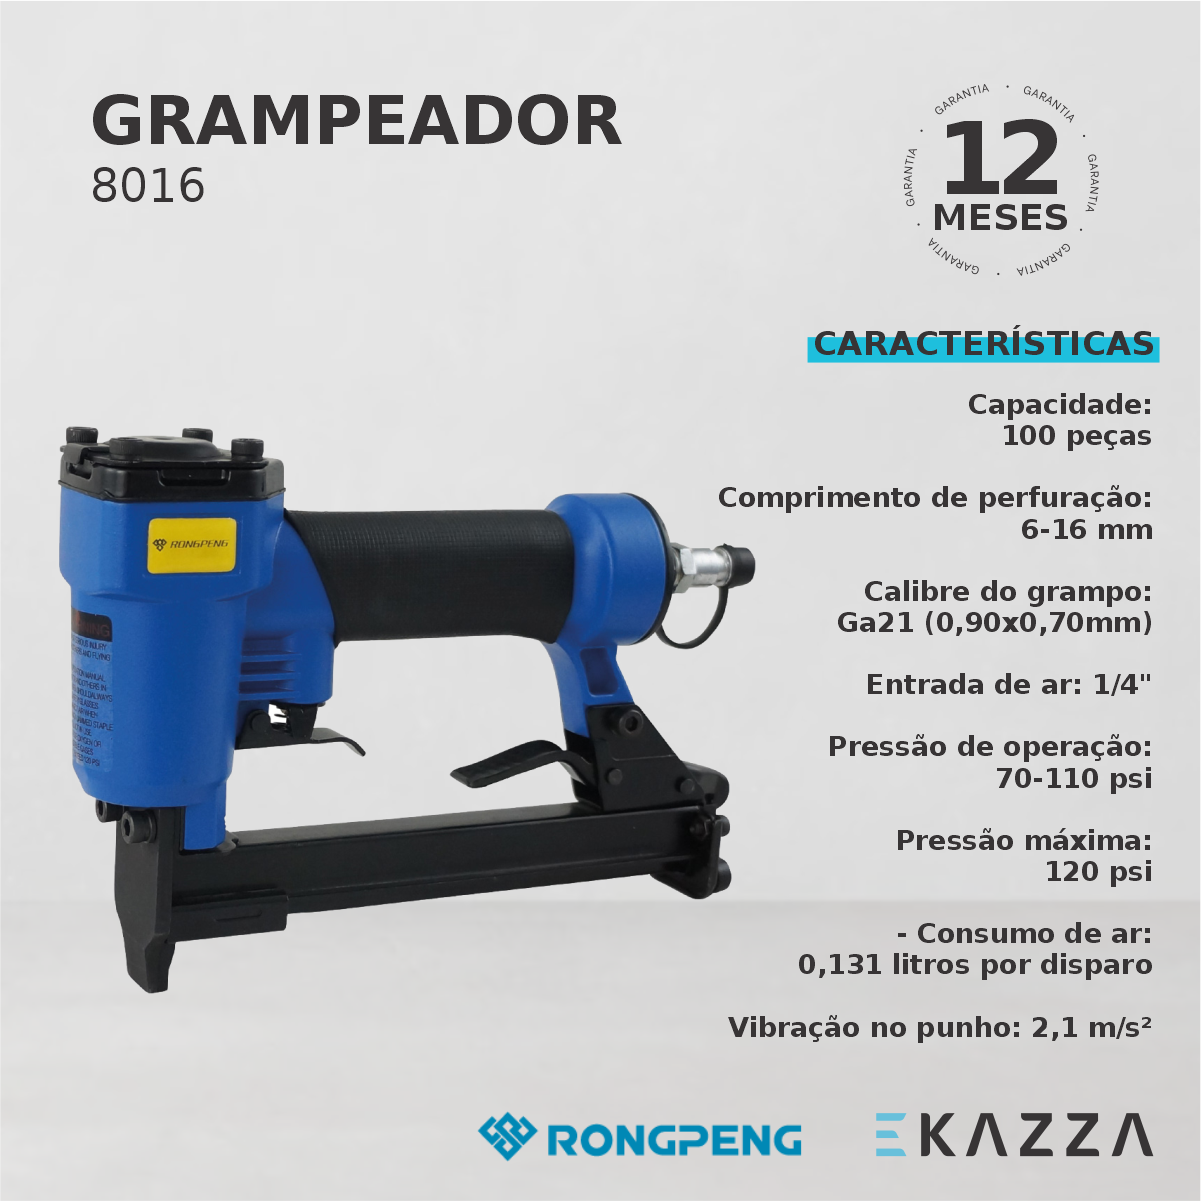 Grampeador 8016 - RONGPENG - 4